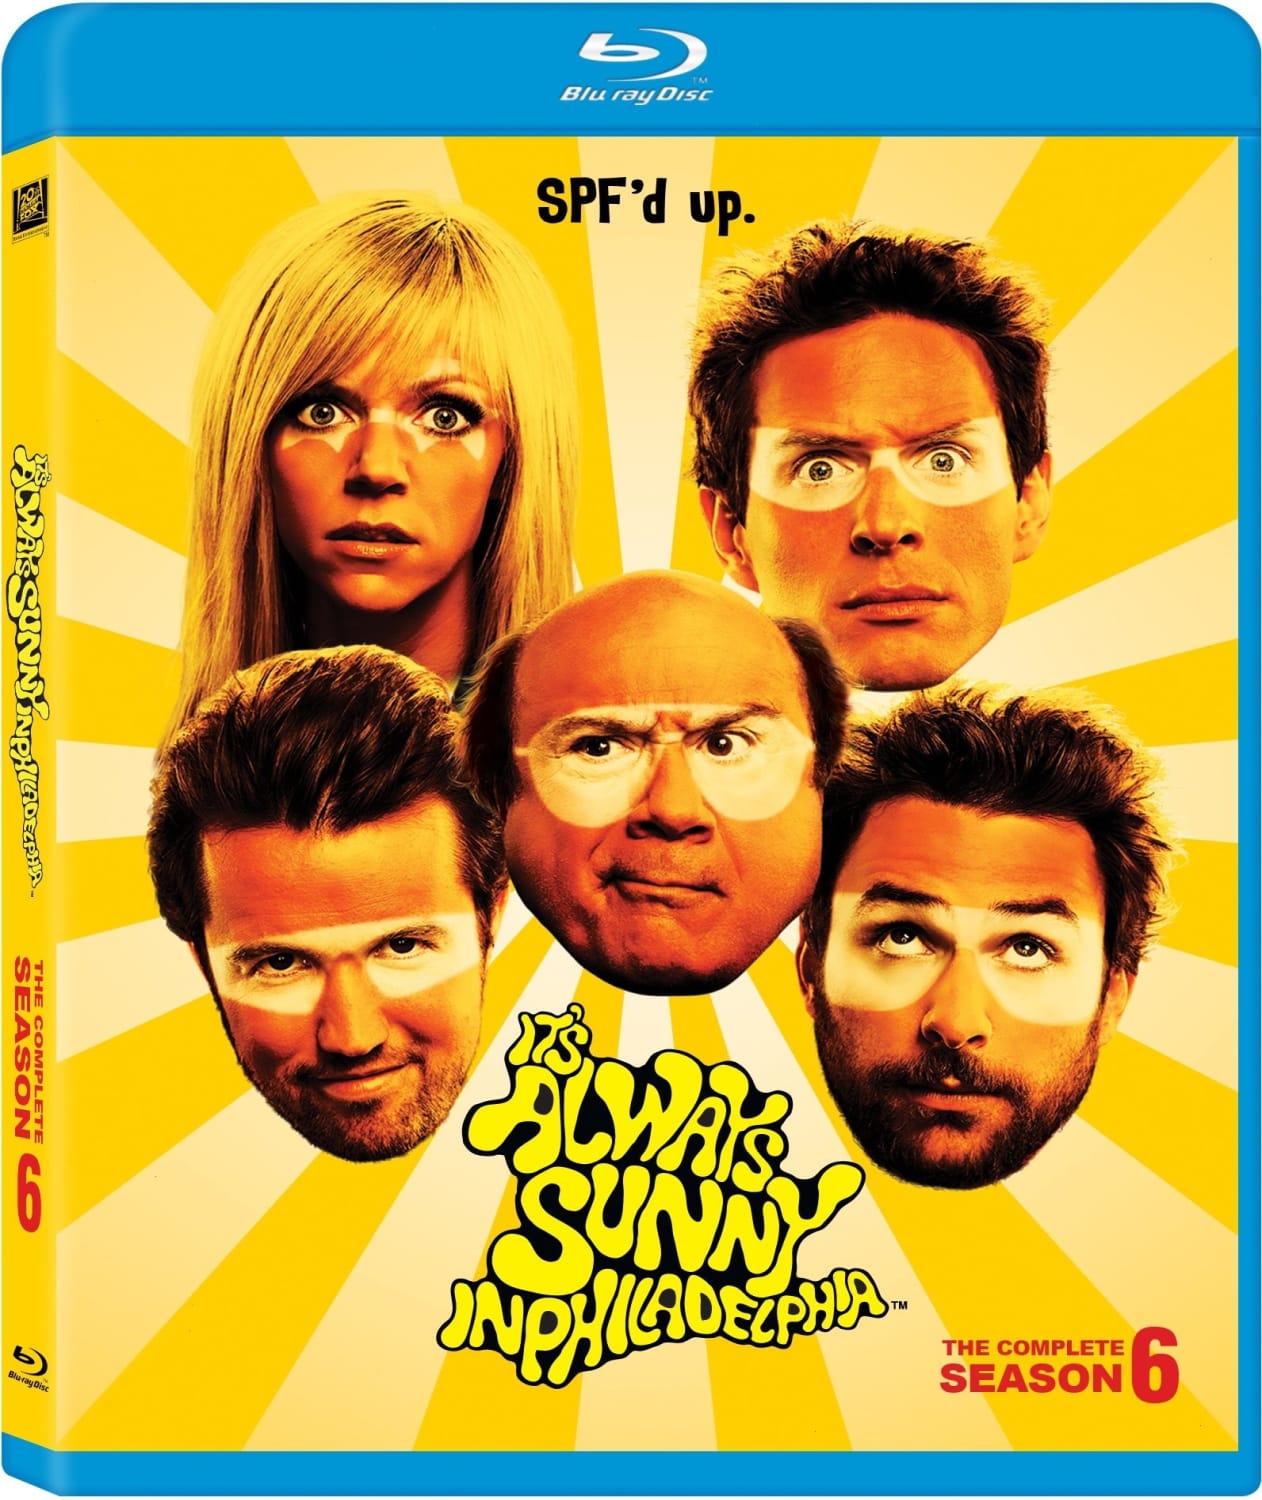 It’s Always Sunny in Philadelphia – Season 6 (Blu-ray) on MovieShack